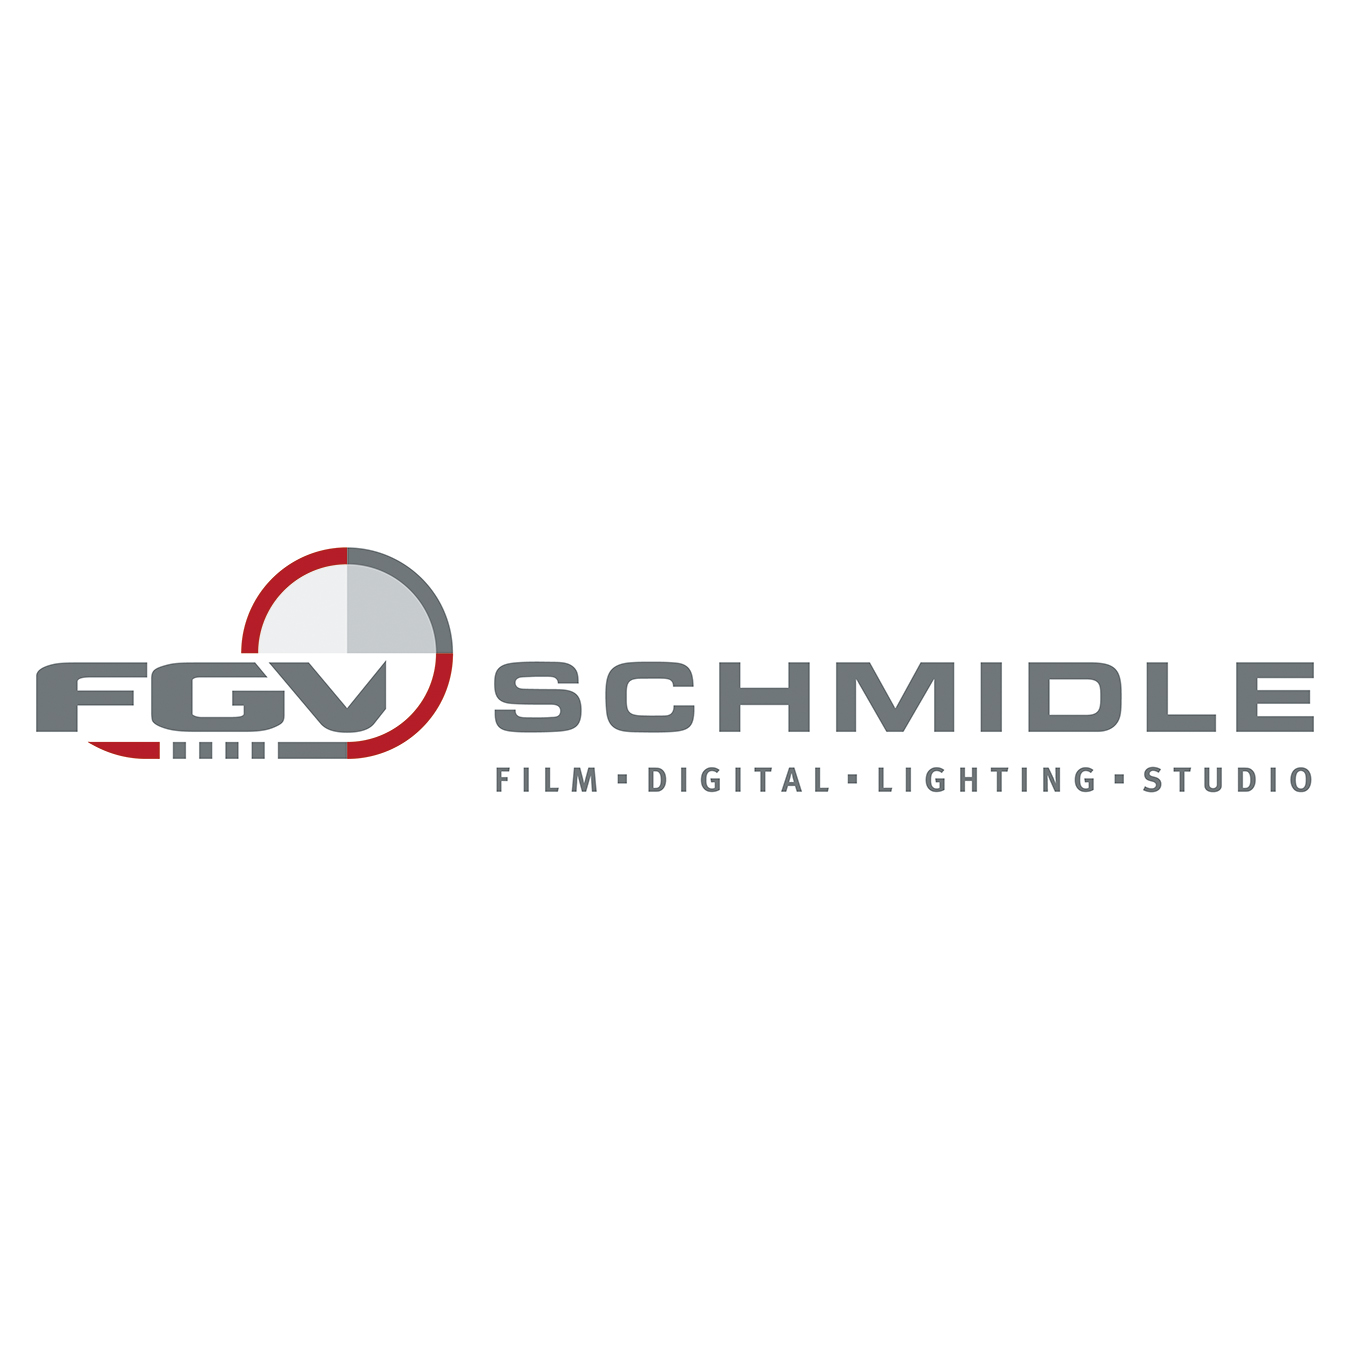 FGV Schmidle GmbH